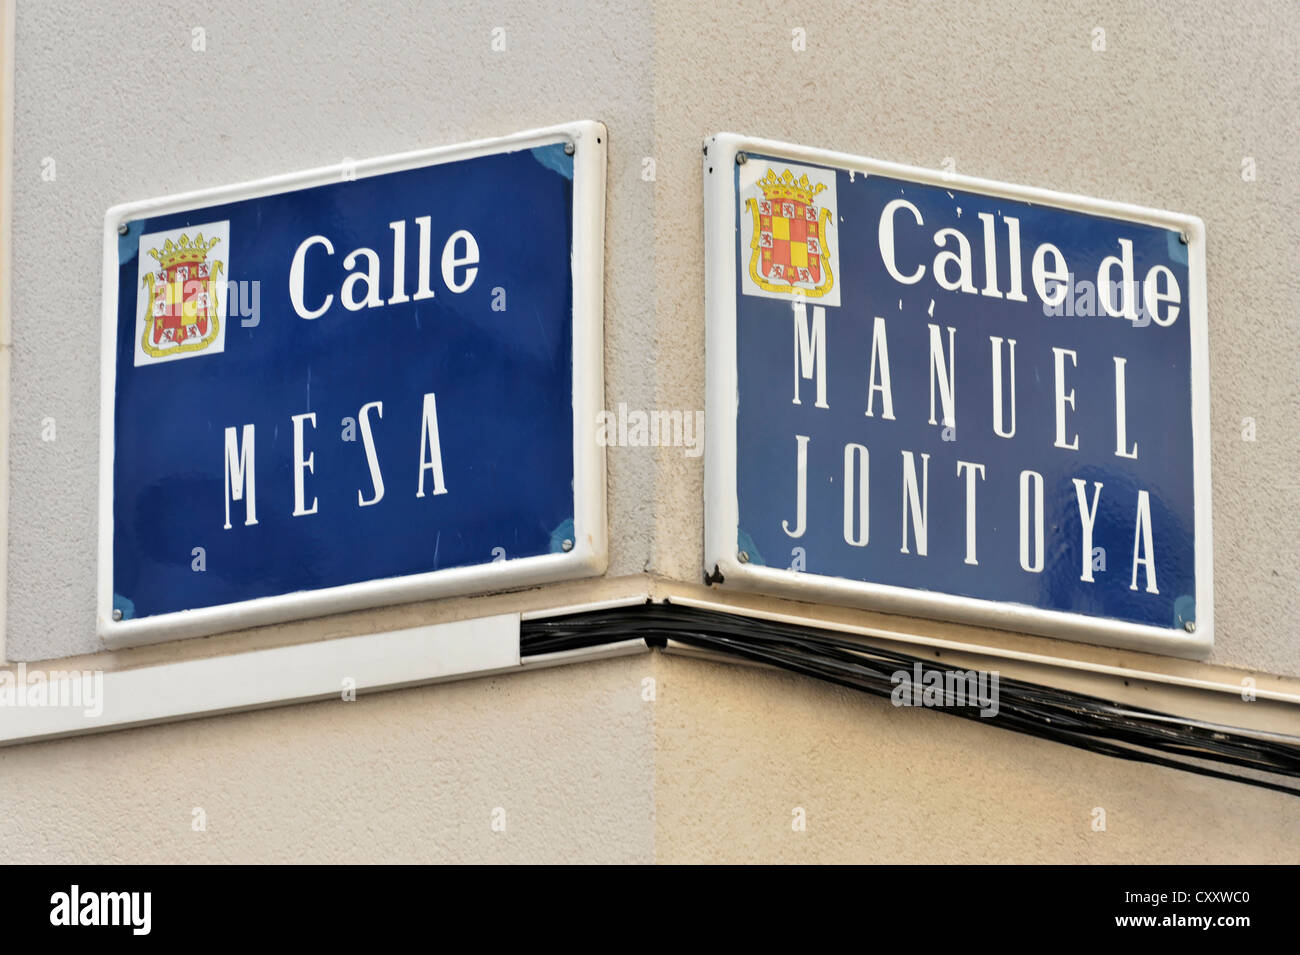 Calle Mesa - Calle Manuel Jontoya, letreros de la calle, en el centro de  Jaén, en Andalucía, España, Europa Fotografía de stock - Alamy